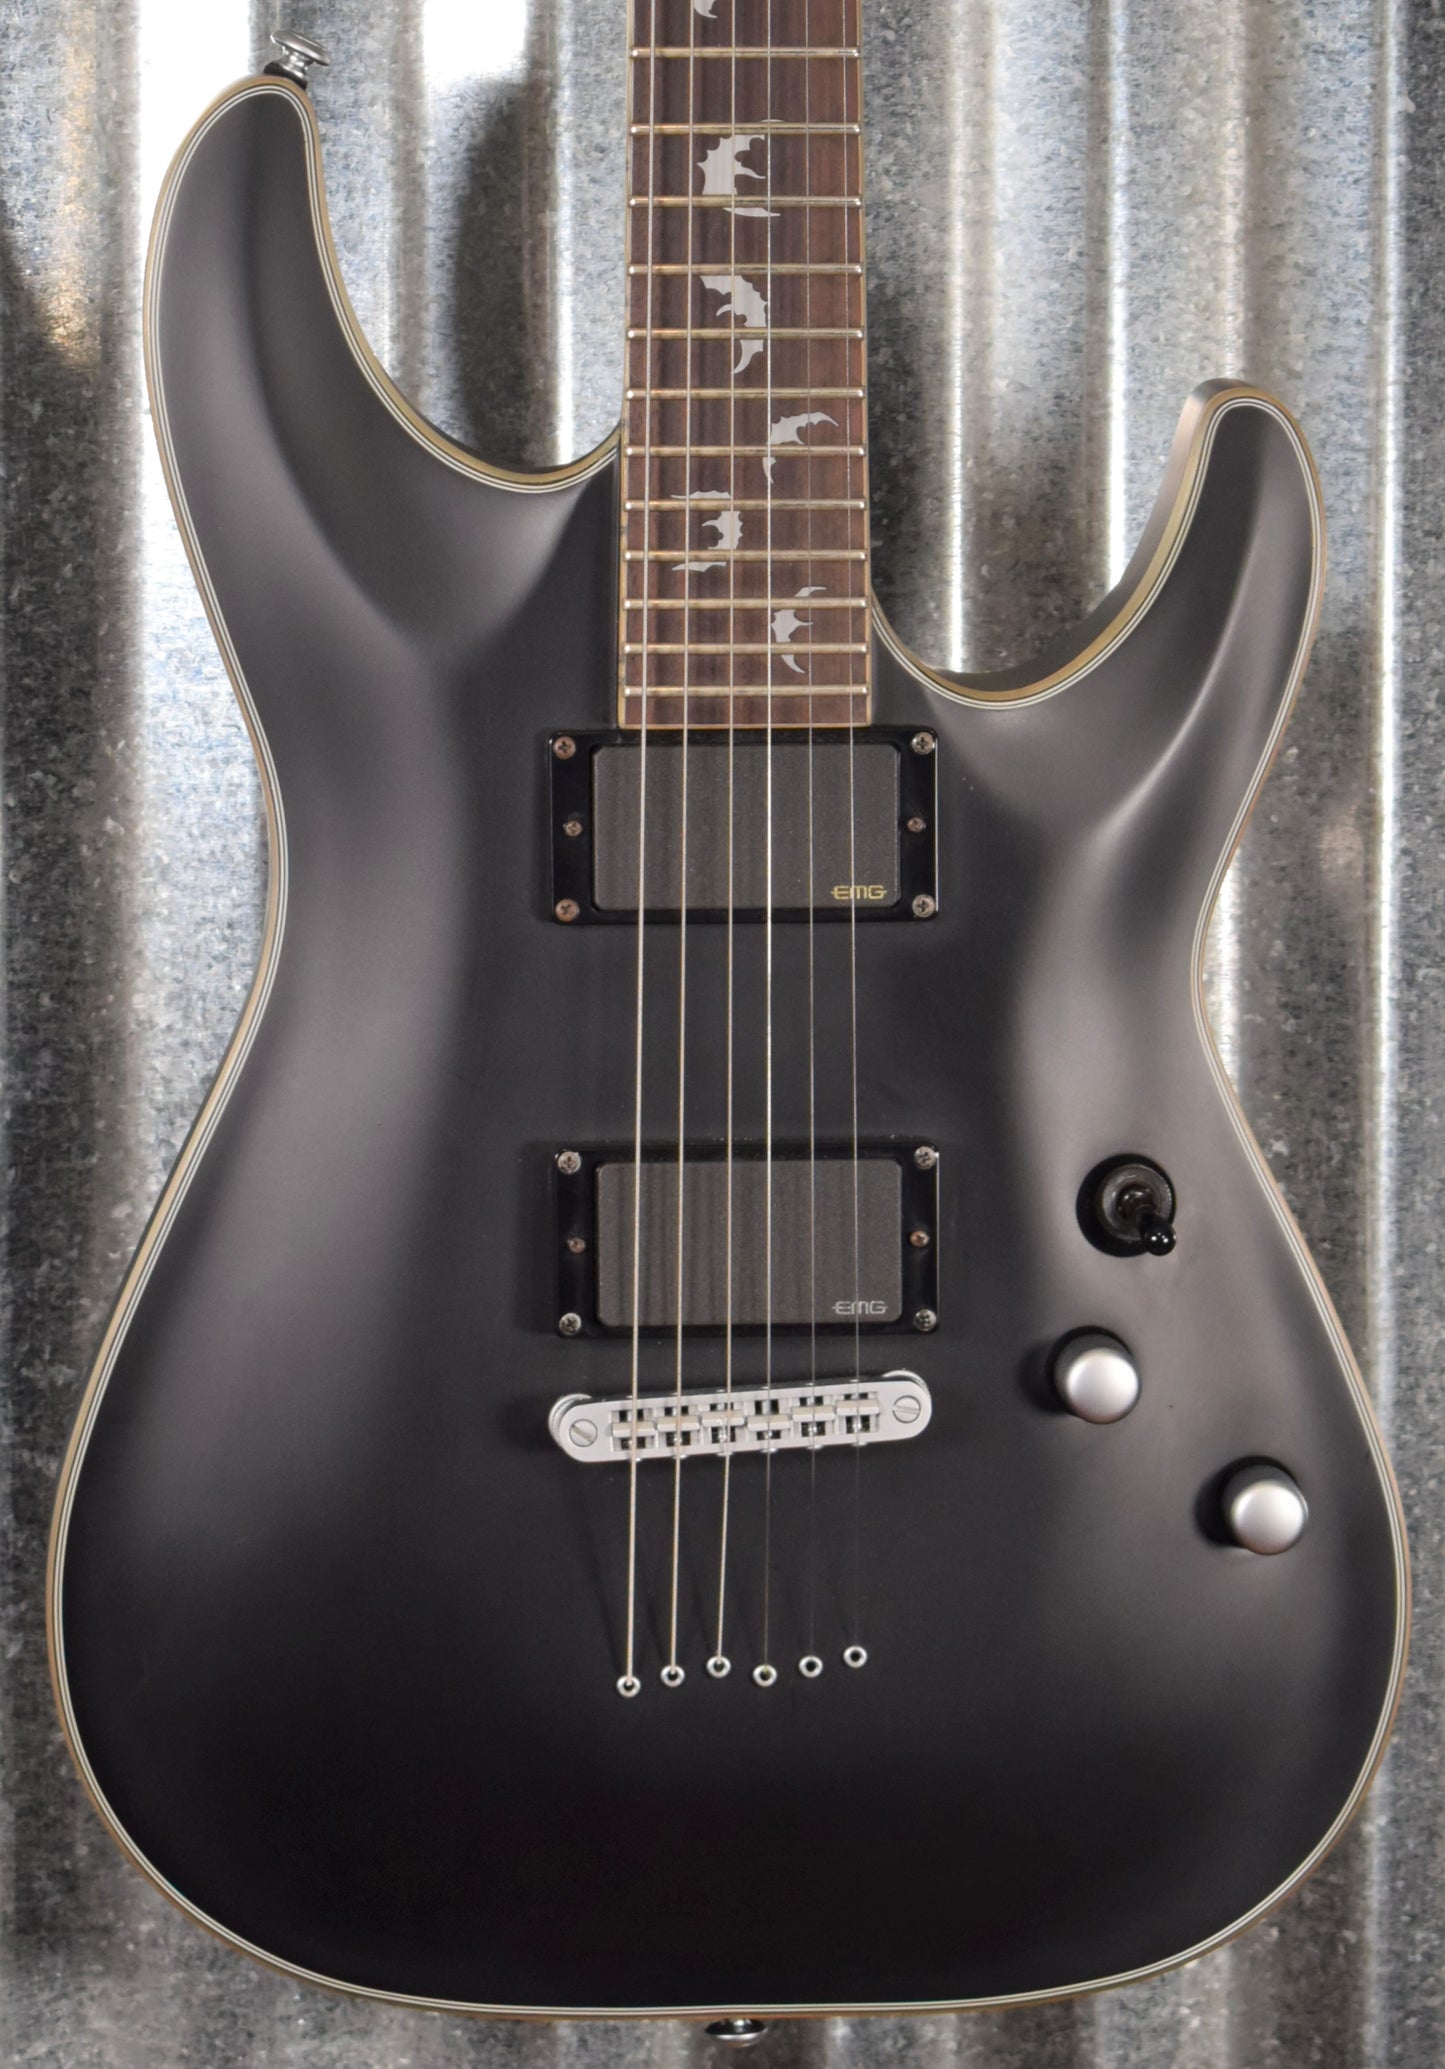 Schecter Diamond Series Damien Platinum-6 Satin Black Guitar #0293 Used